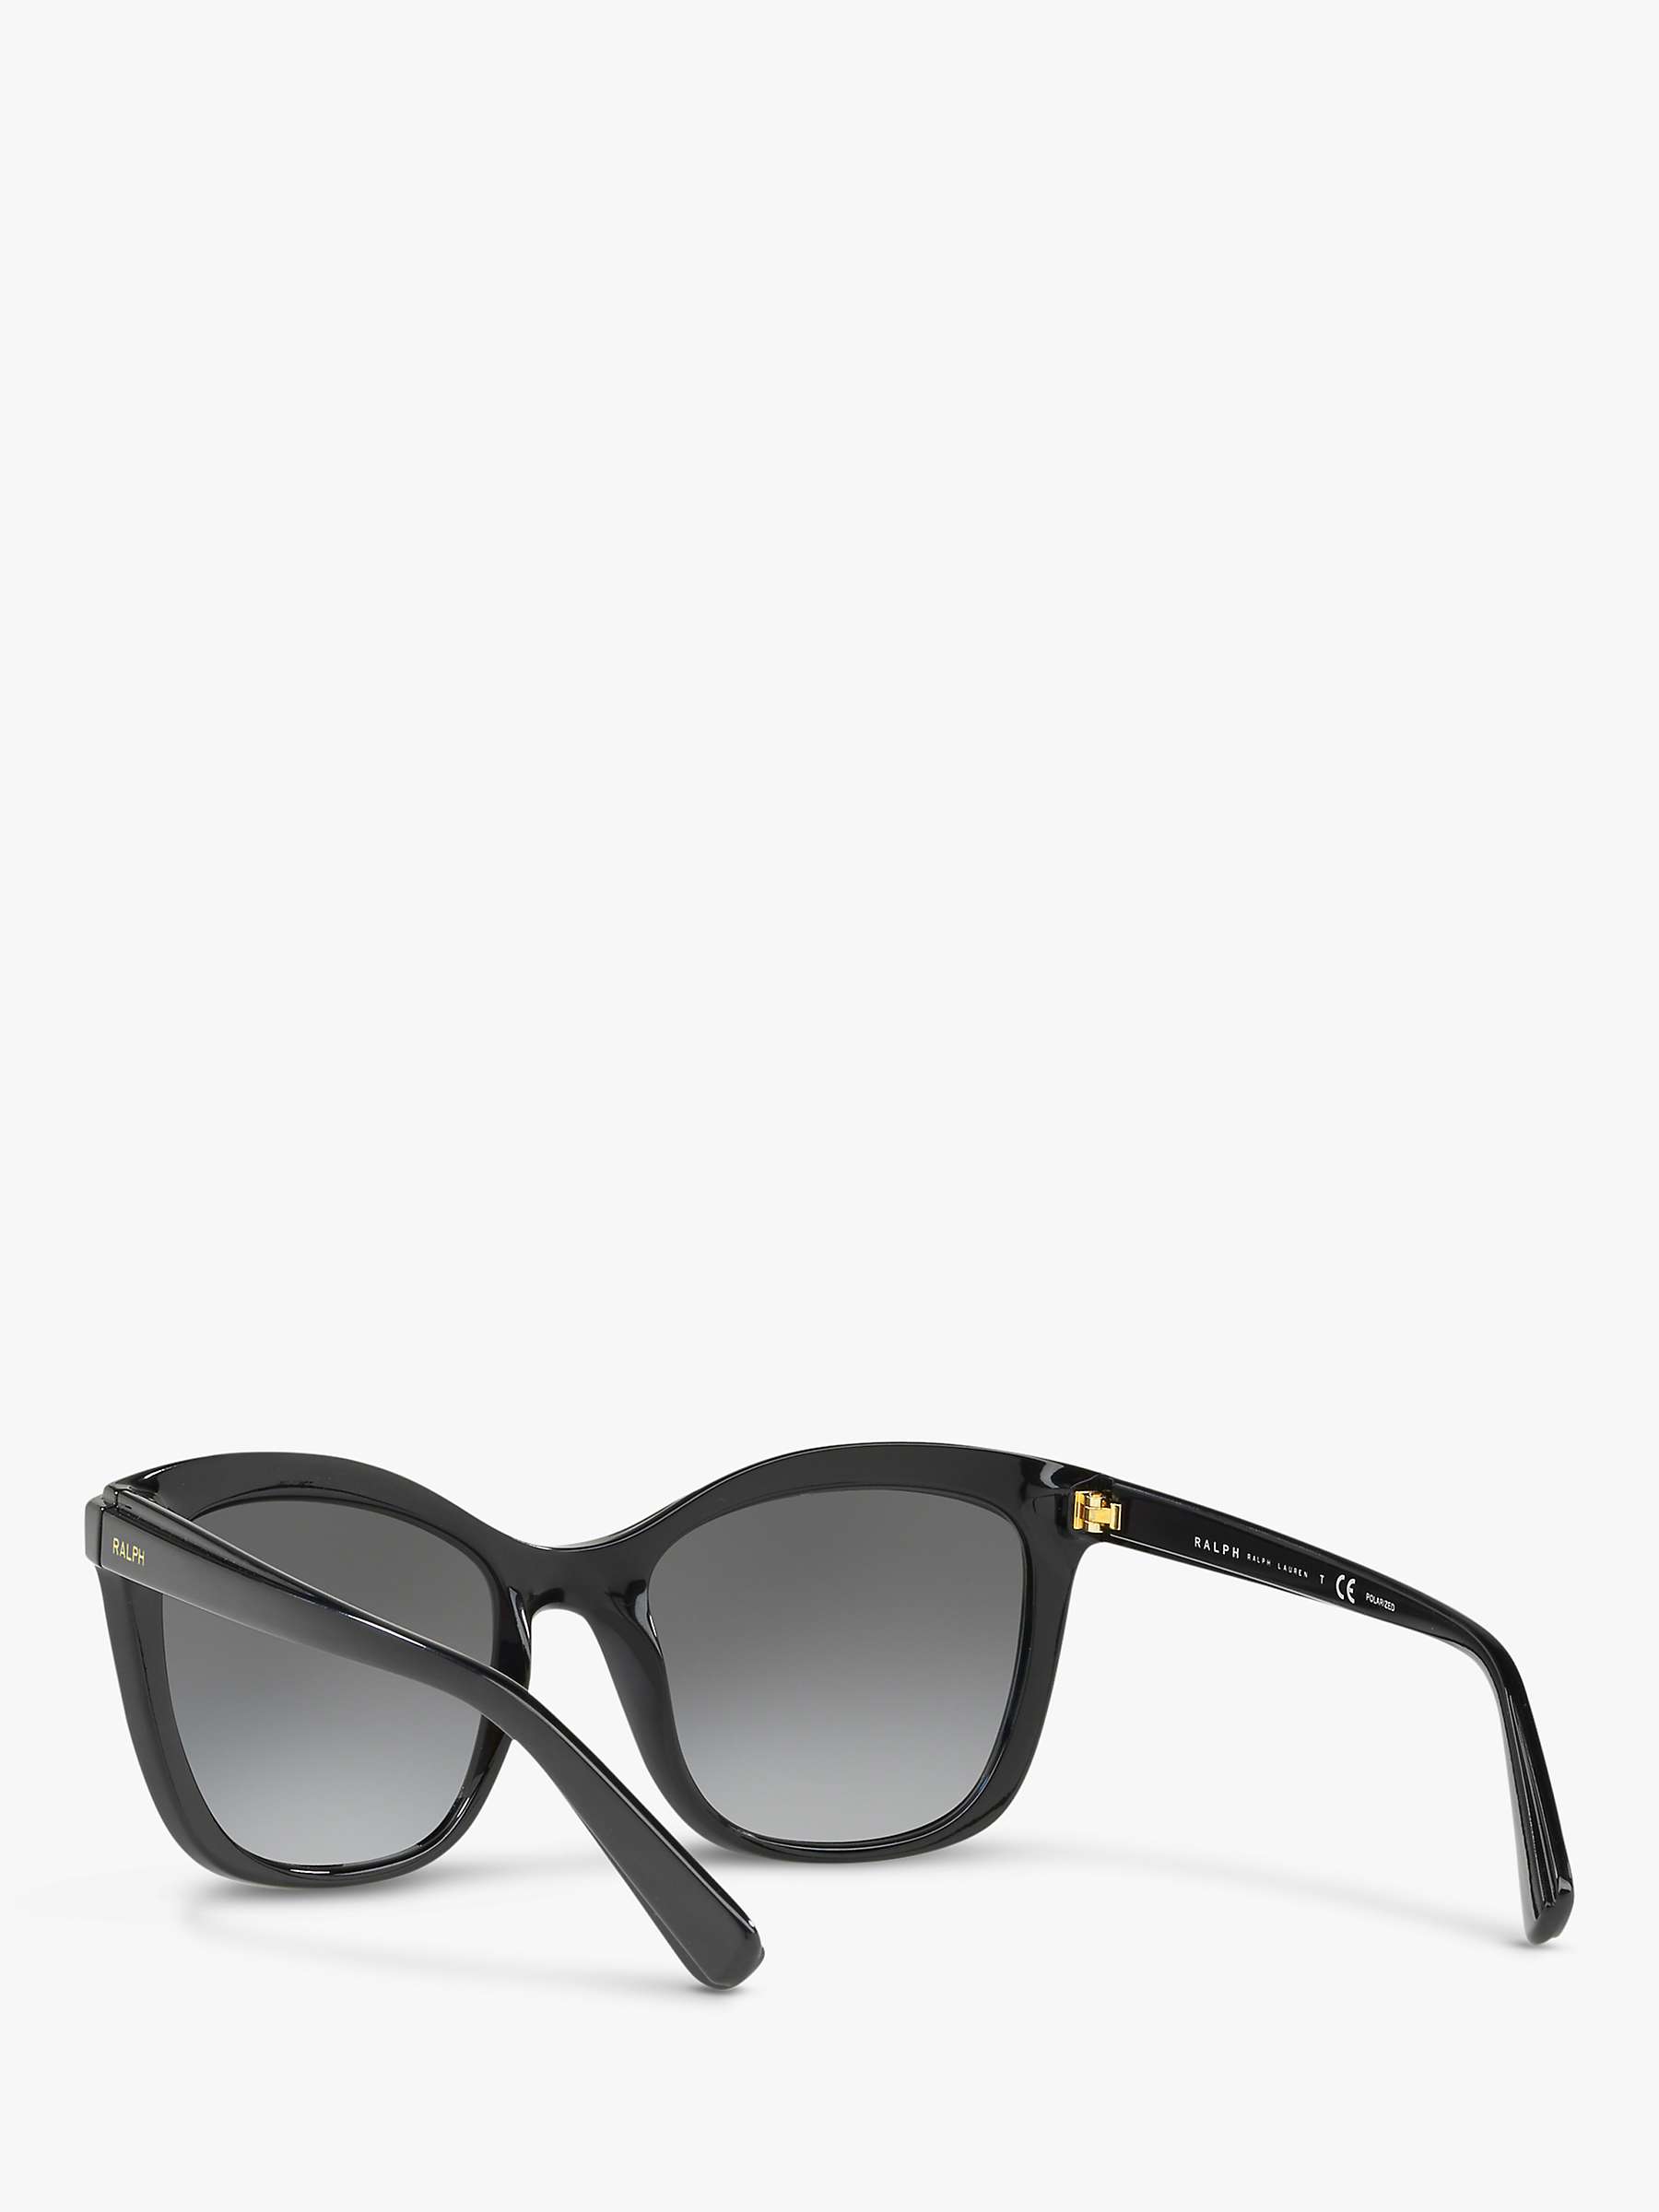 Buy Ralph RA5252 Women's Polarised Square Sunglasses, Black Online at johnlewis.com